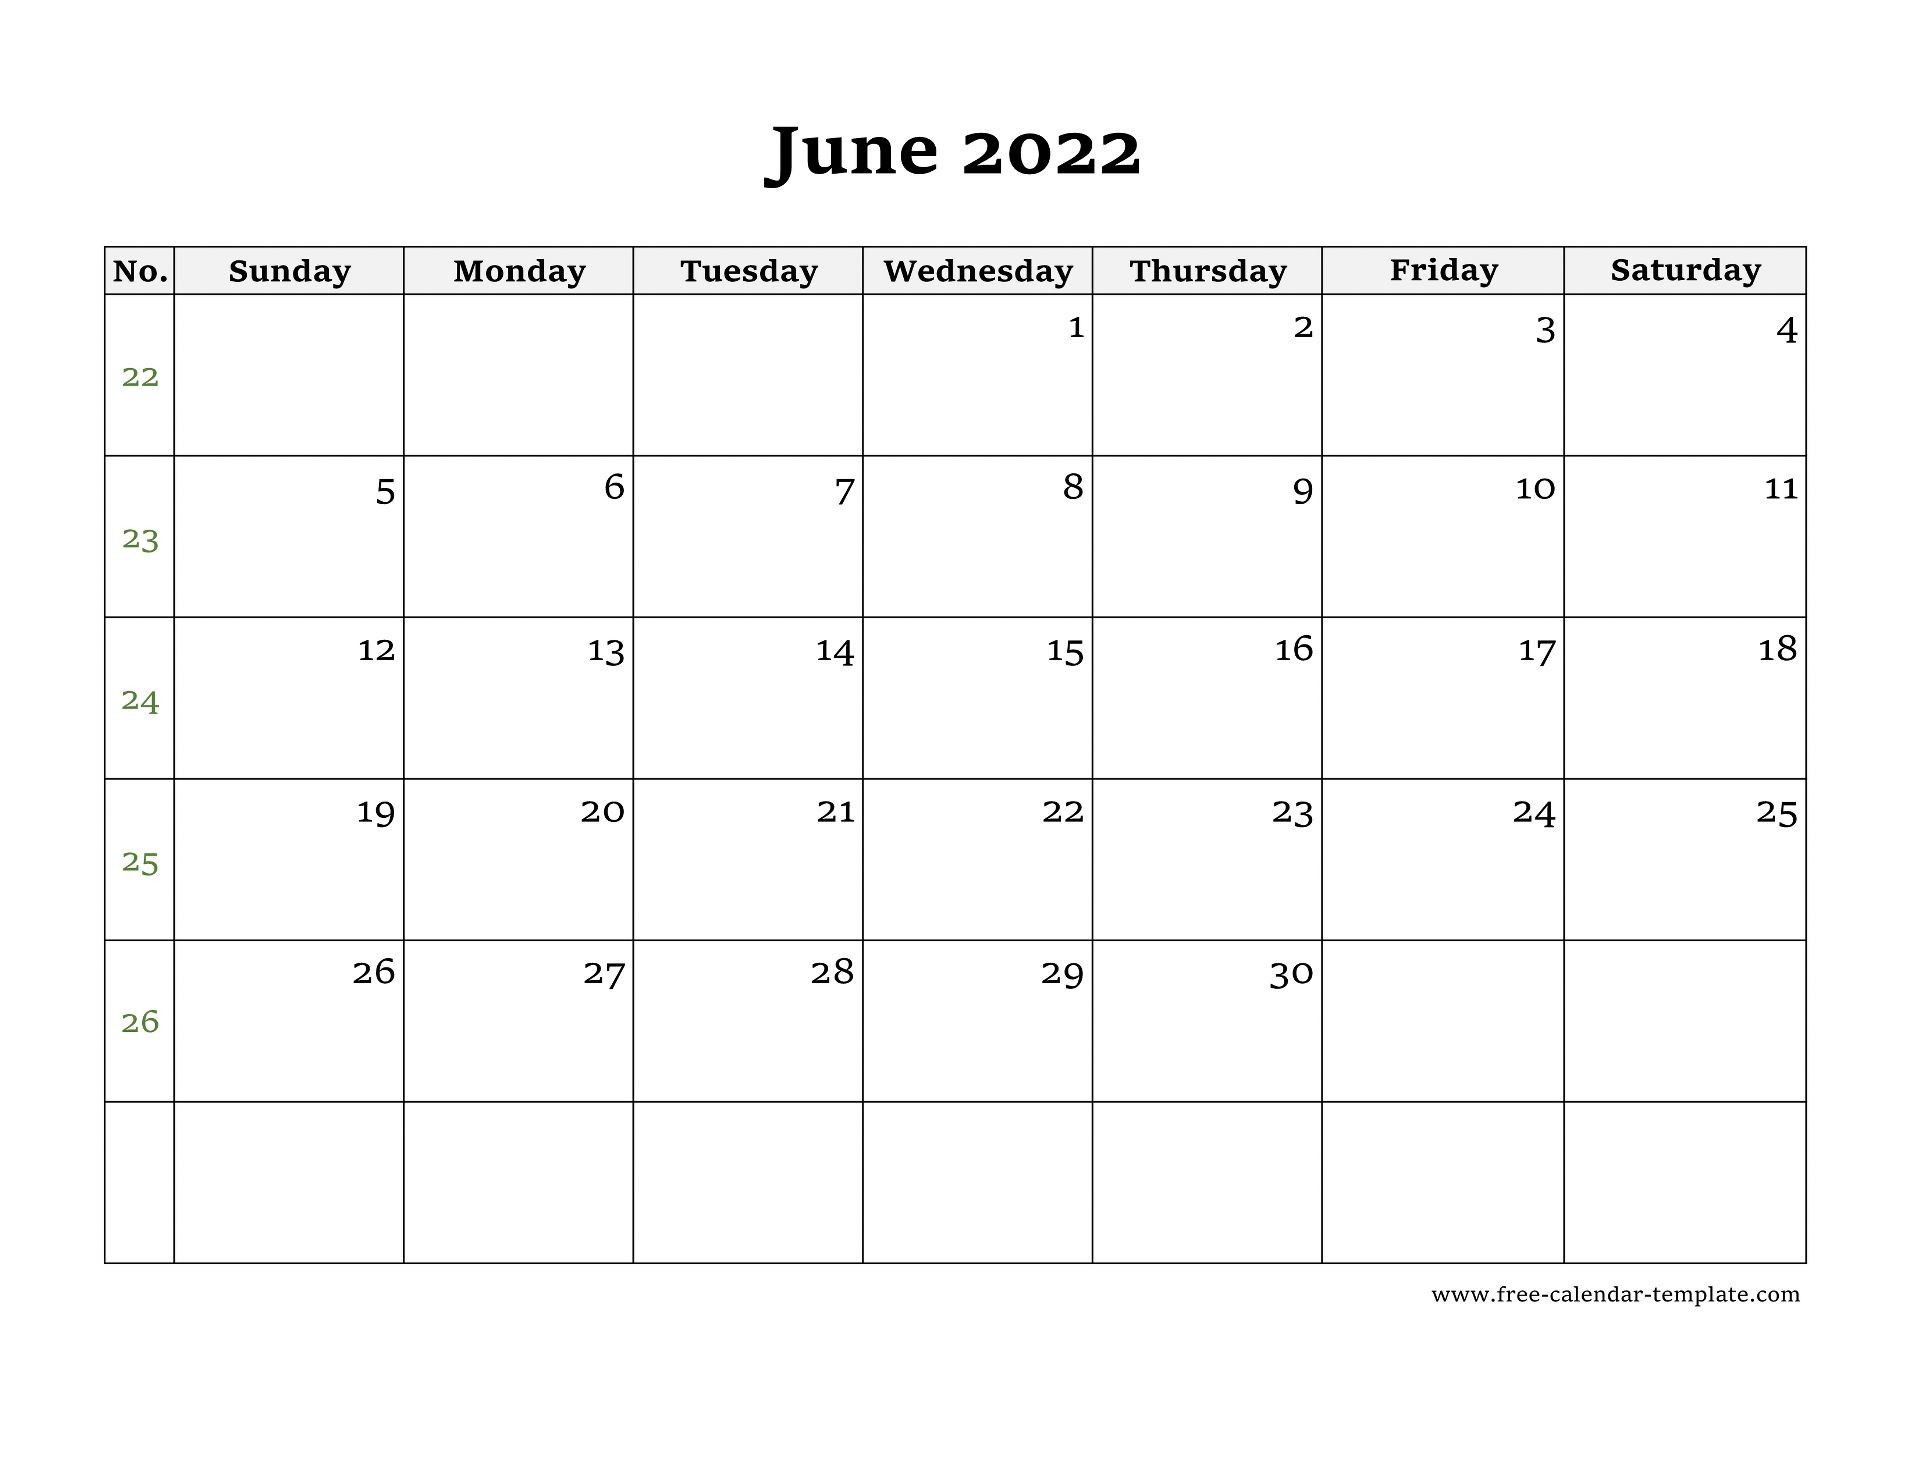 June 2022 Free Calendar Tempplate | Free-Calendar-Template  November 2022 - June 2022 Calendar